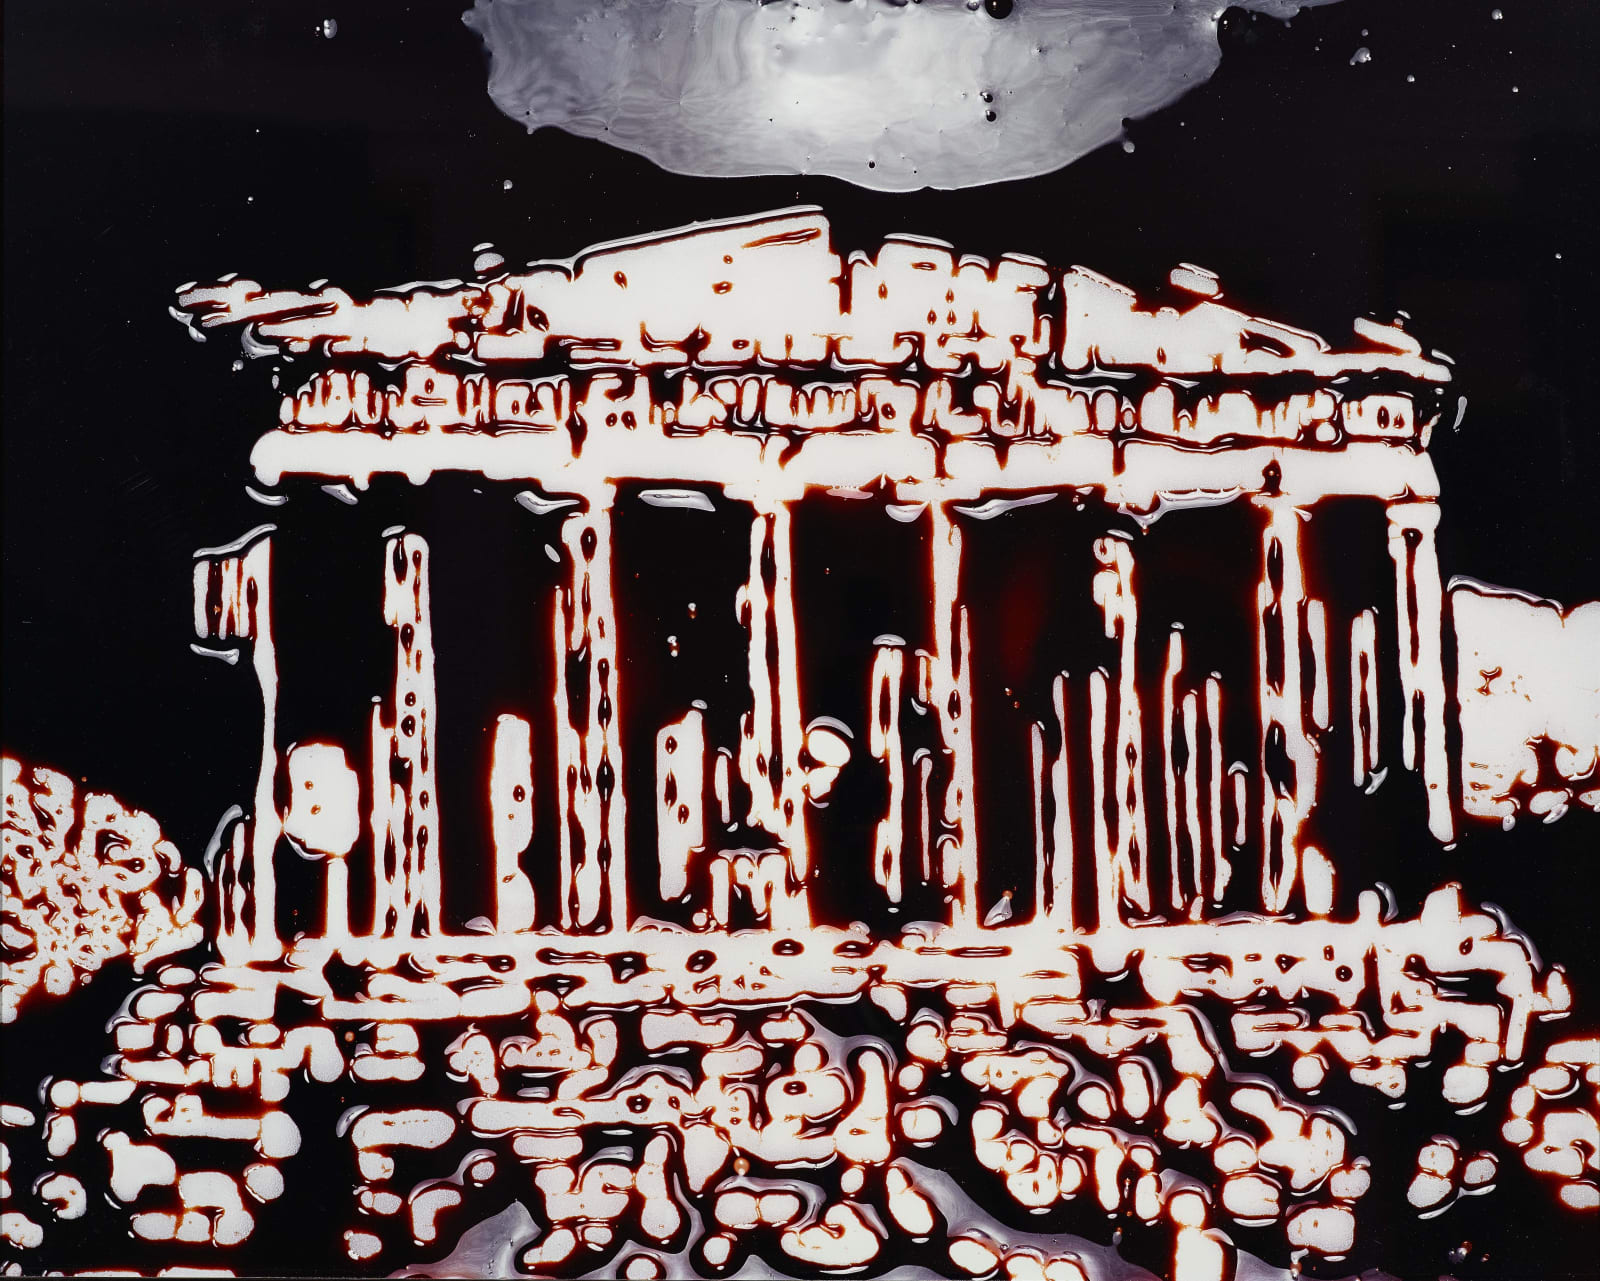 Vik Muniz, The Parthenon, 2003